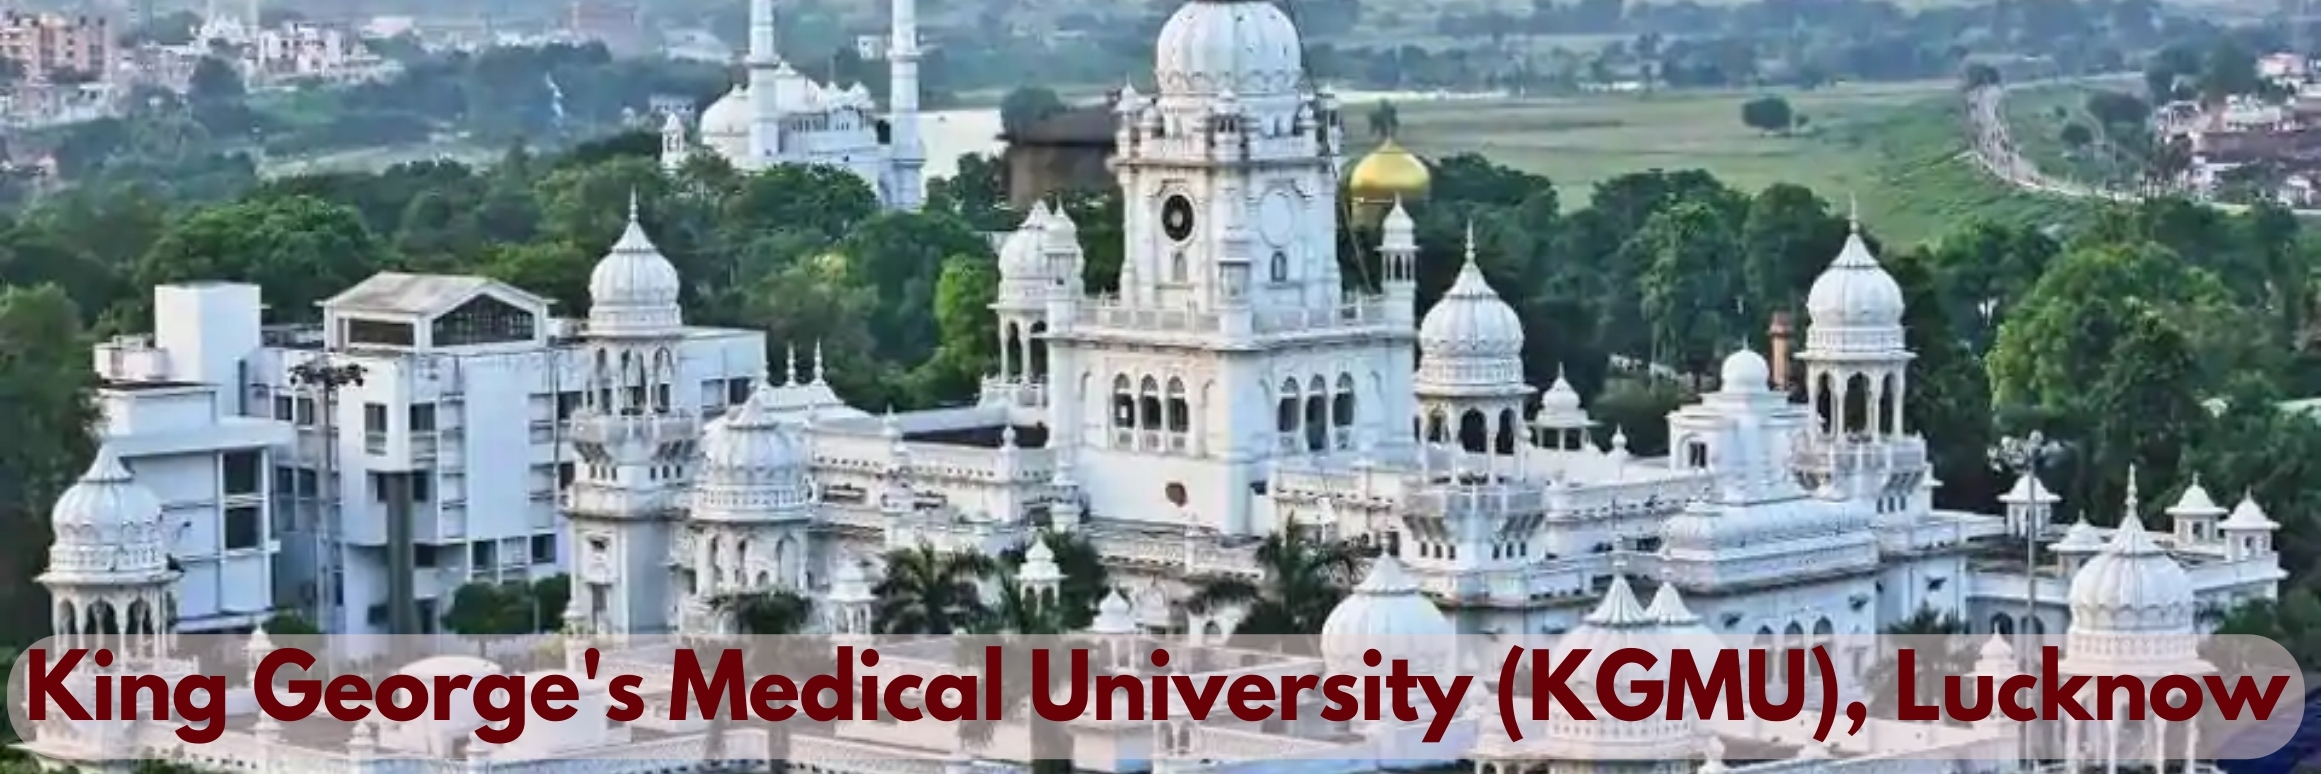 King George's Medical University (KGMU), Lucknow